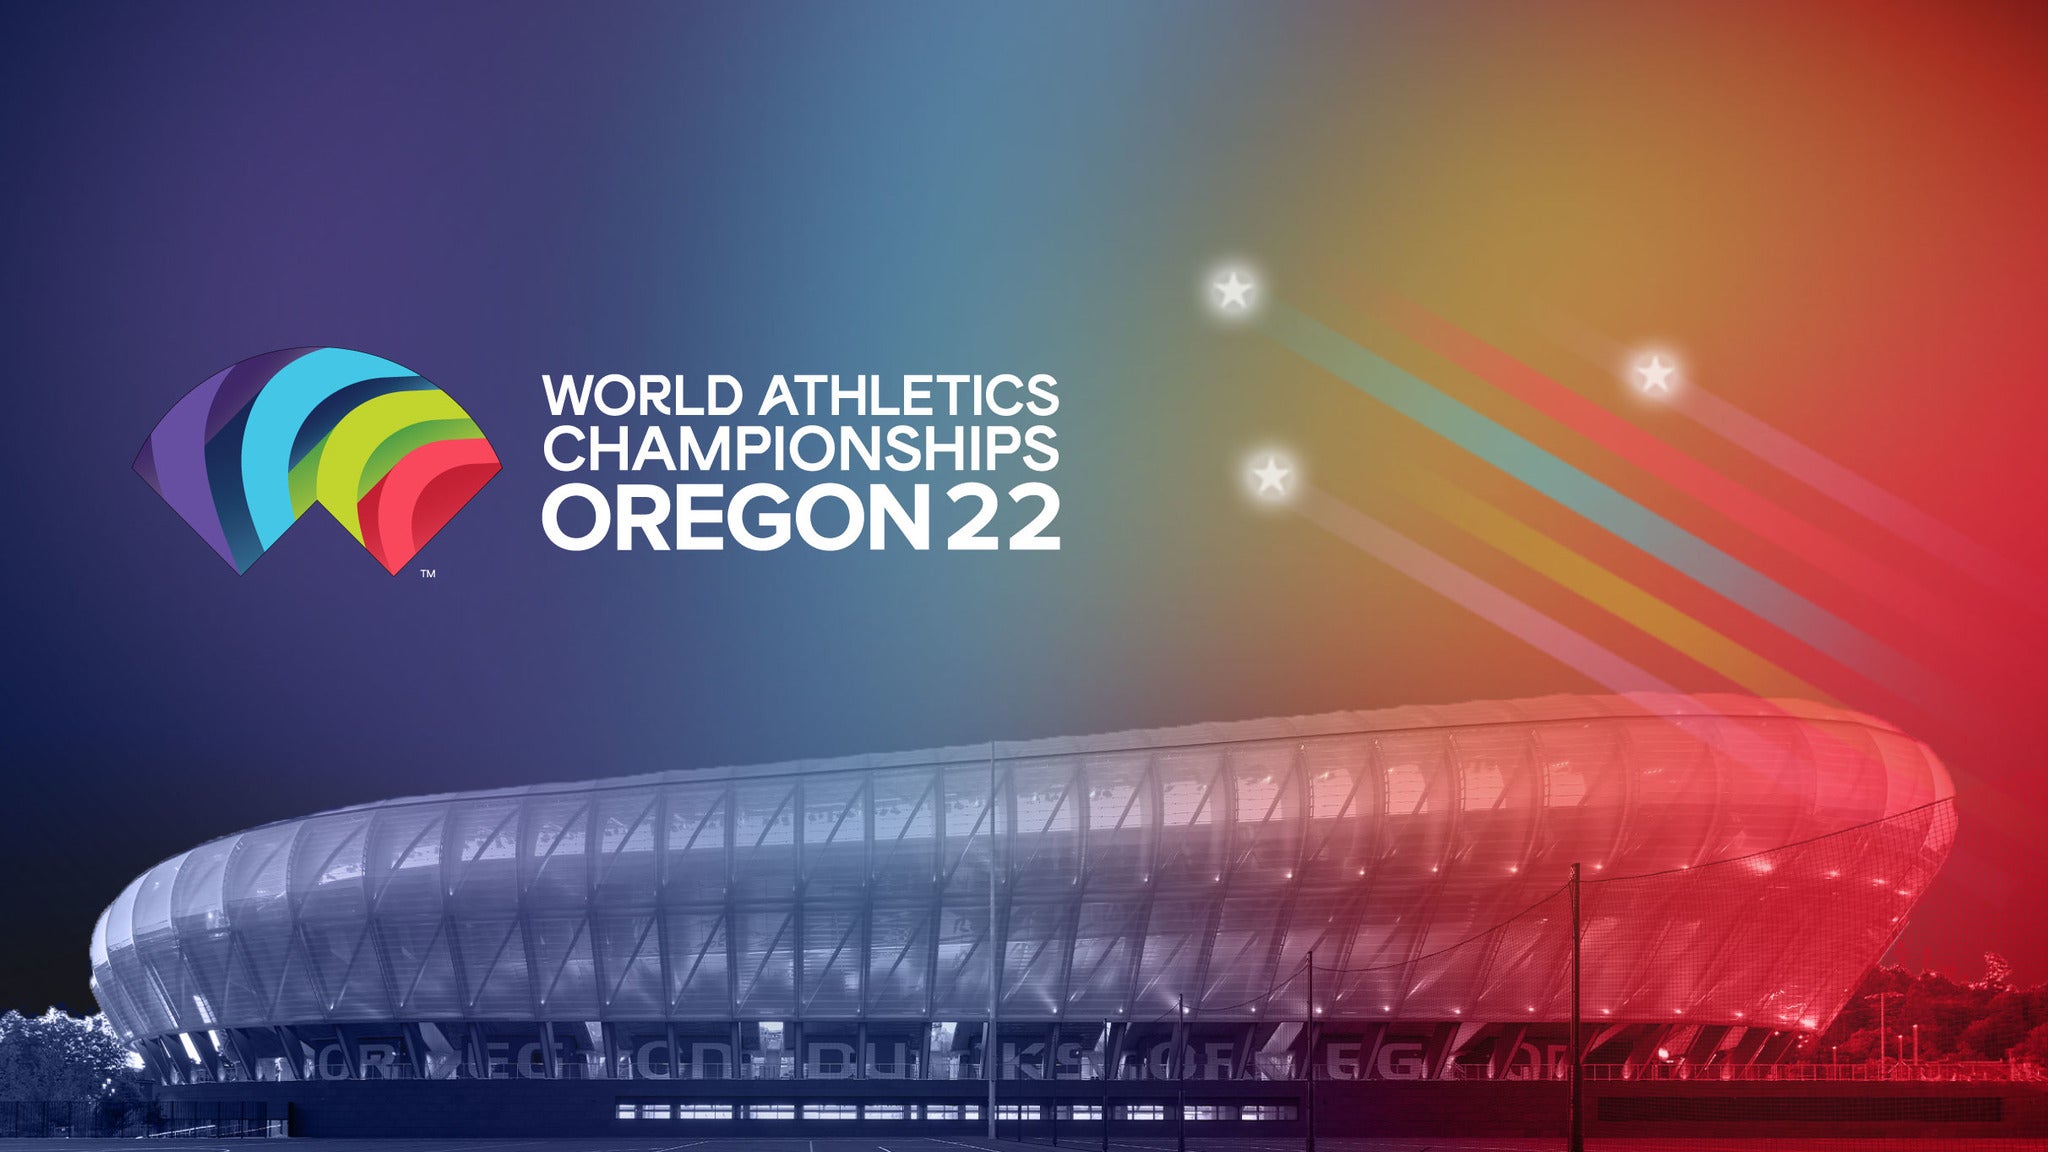 WORLD ATHLETICS CHAMPIONSHIPS OREGON22 Tickets | Single Game Tickets